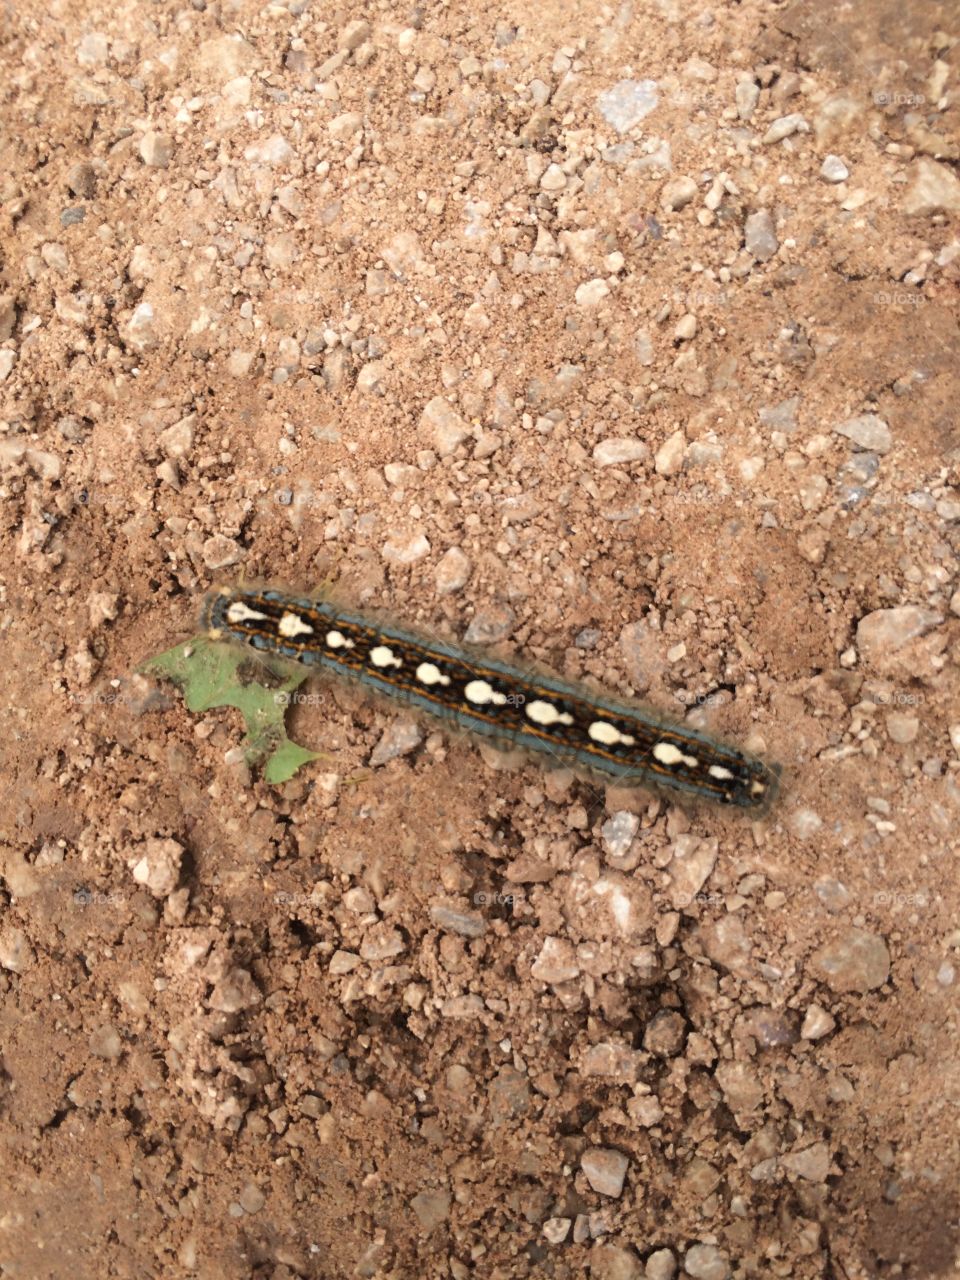 Caterpillar making his way across the ground crawling along. 